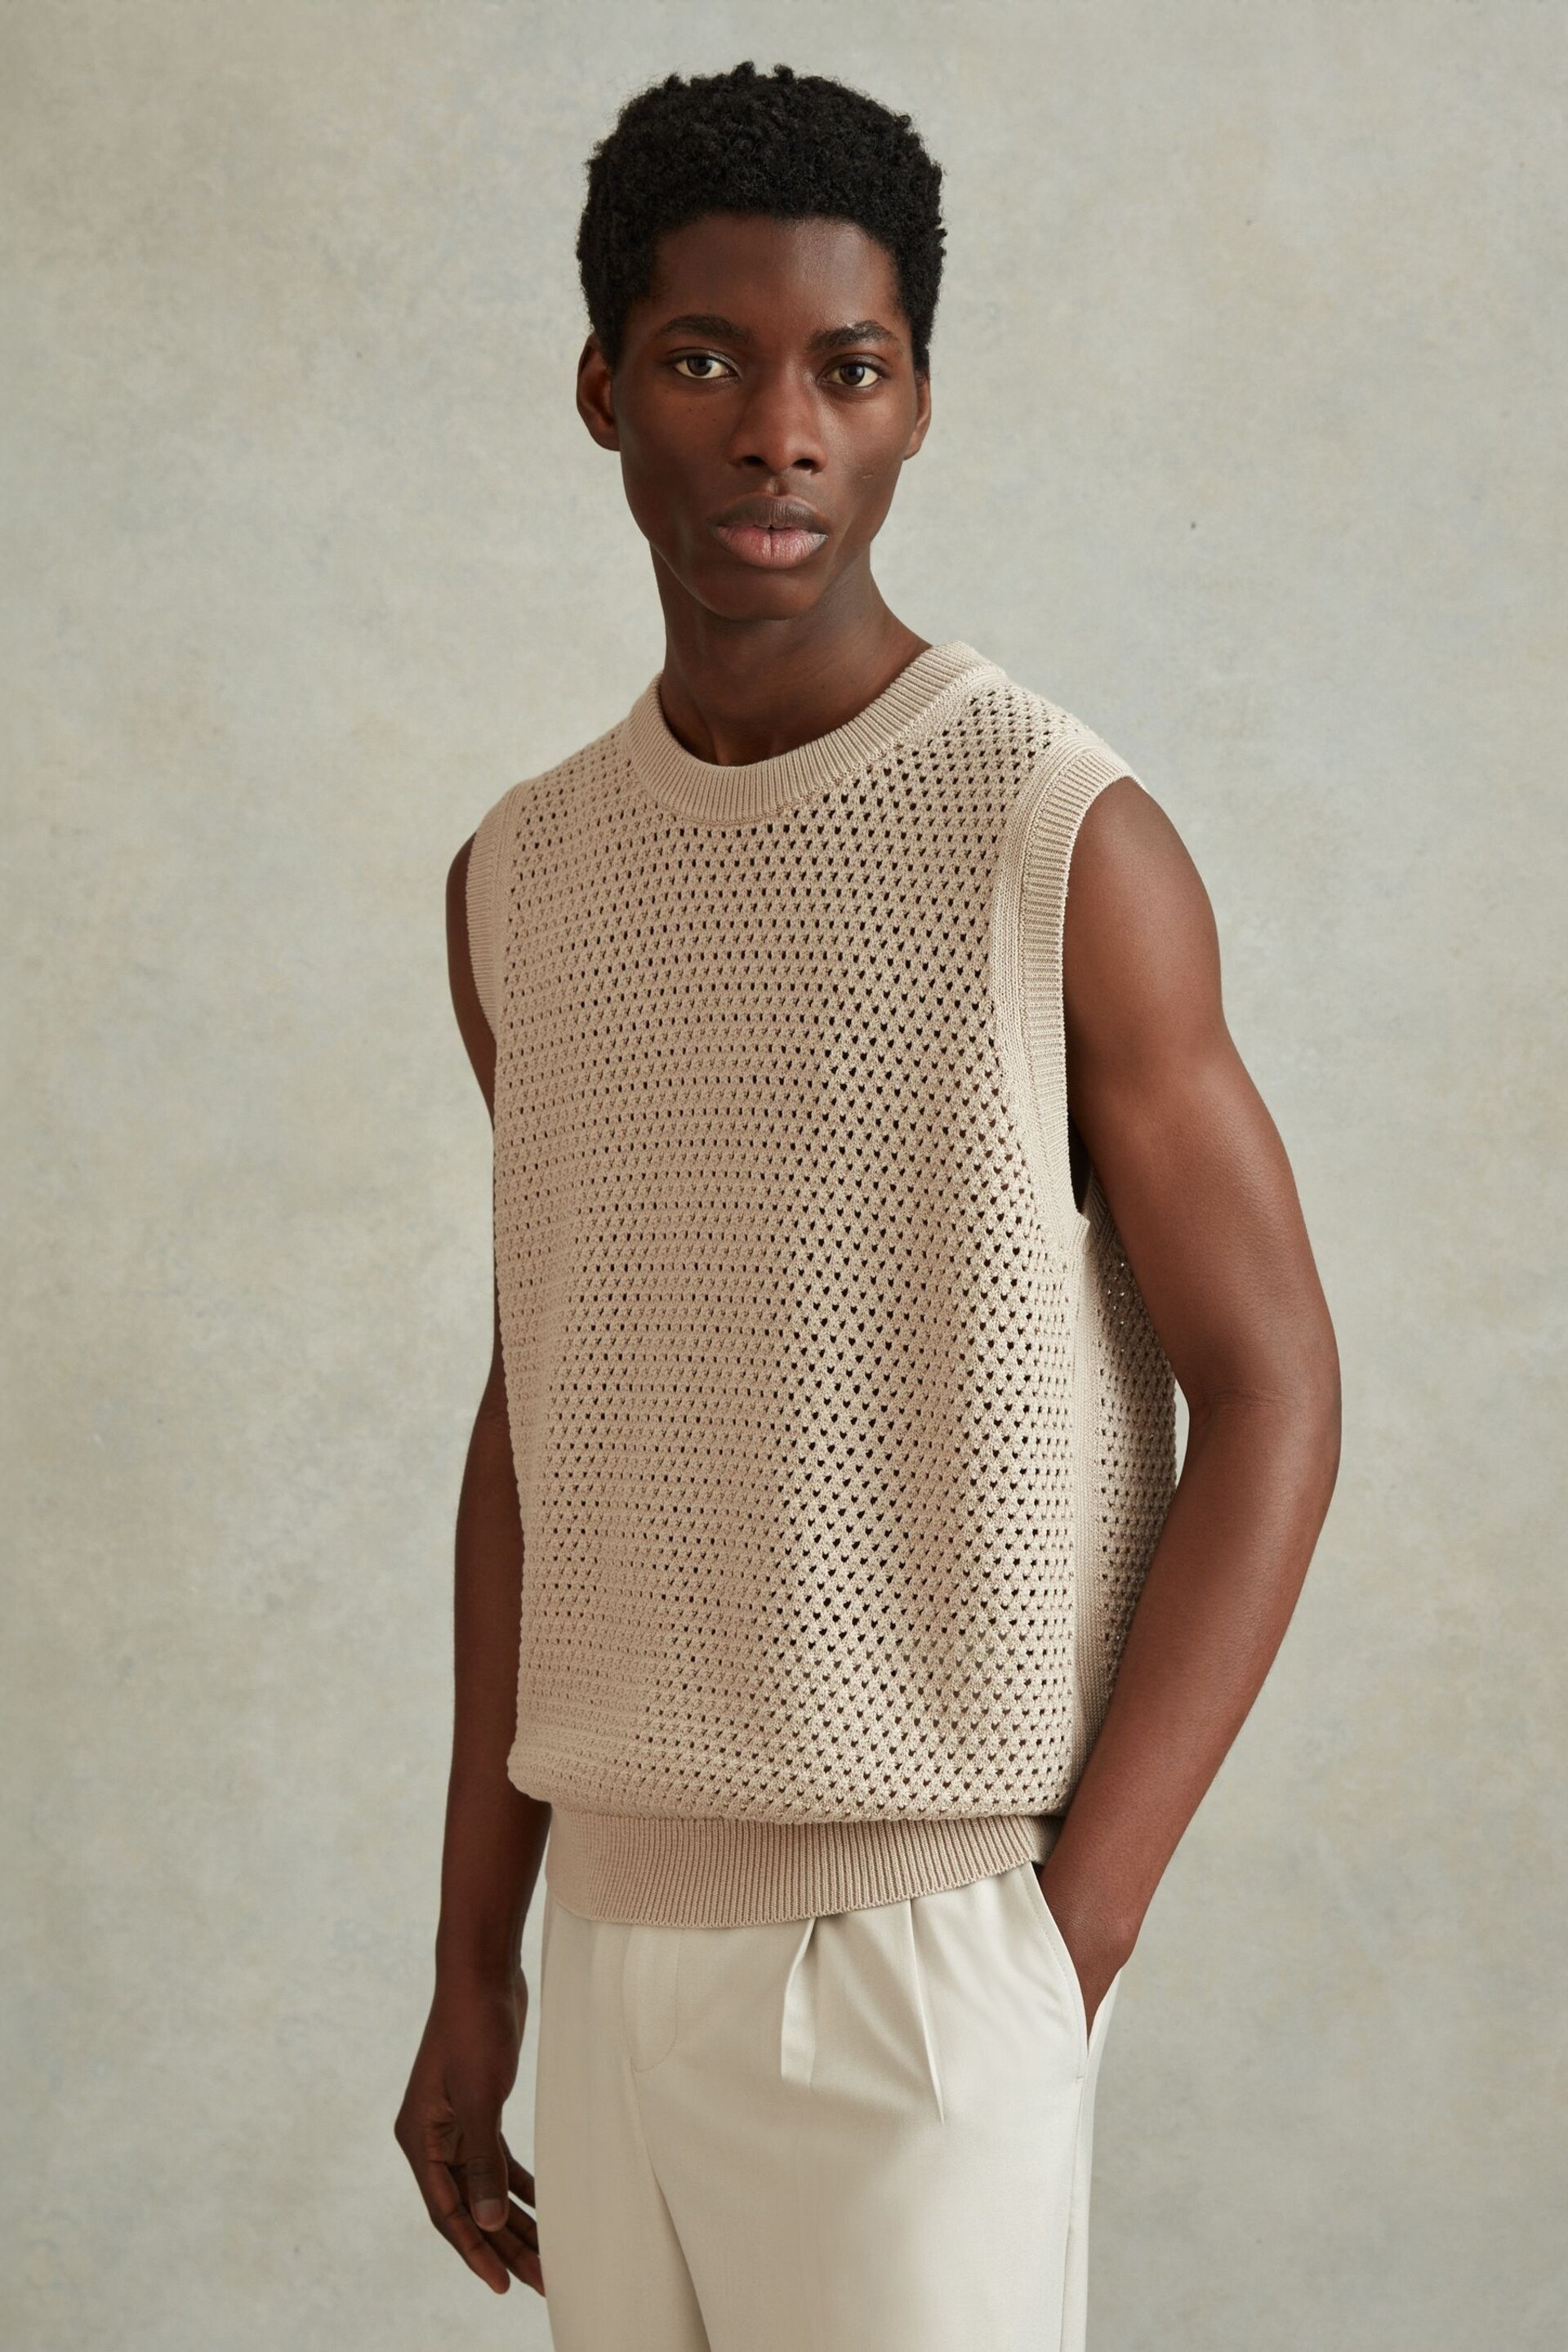 Reiss Soft Taupe Dandy Cotton Blend Crochet Vest - Image 1 of 6